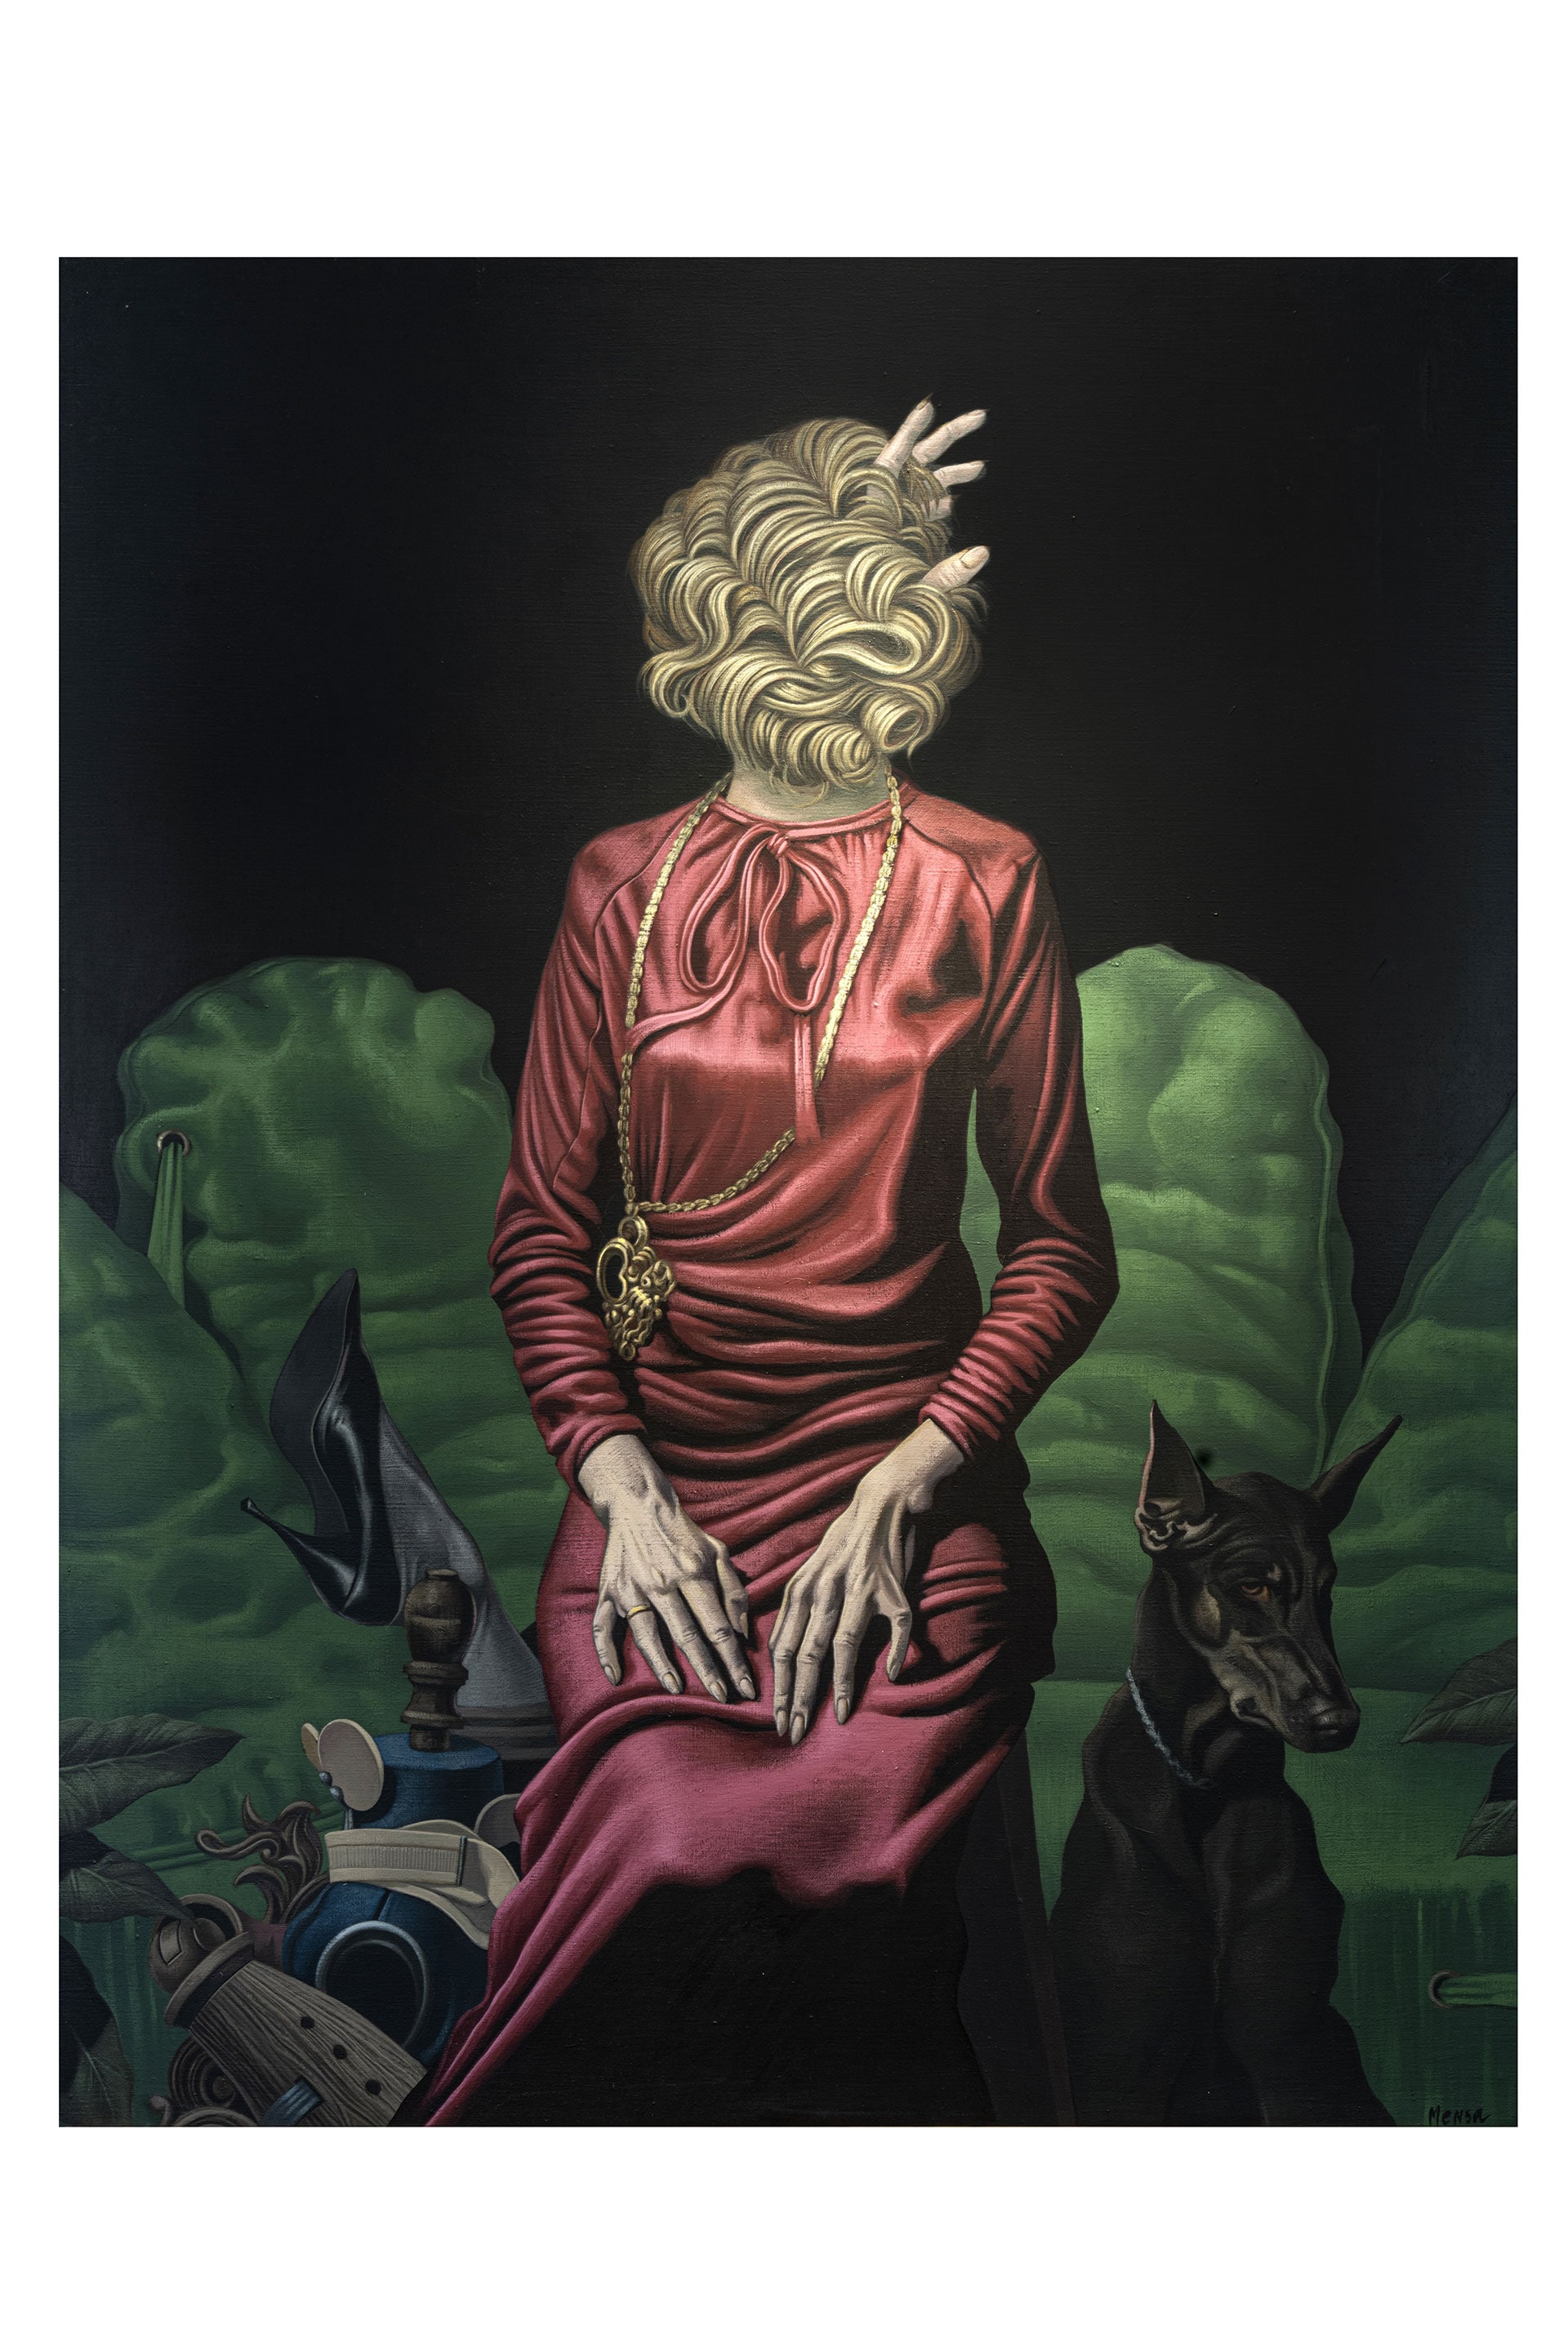 Carlos Mensa "La dama del doberman", 1973. Olio su tela, cm 146x112 